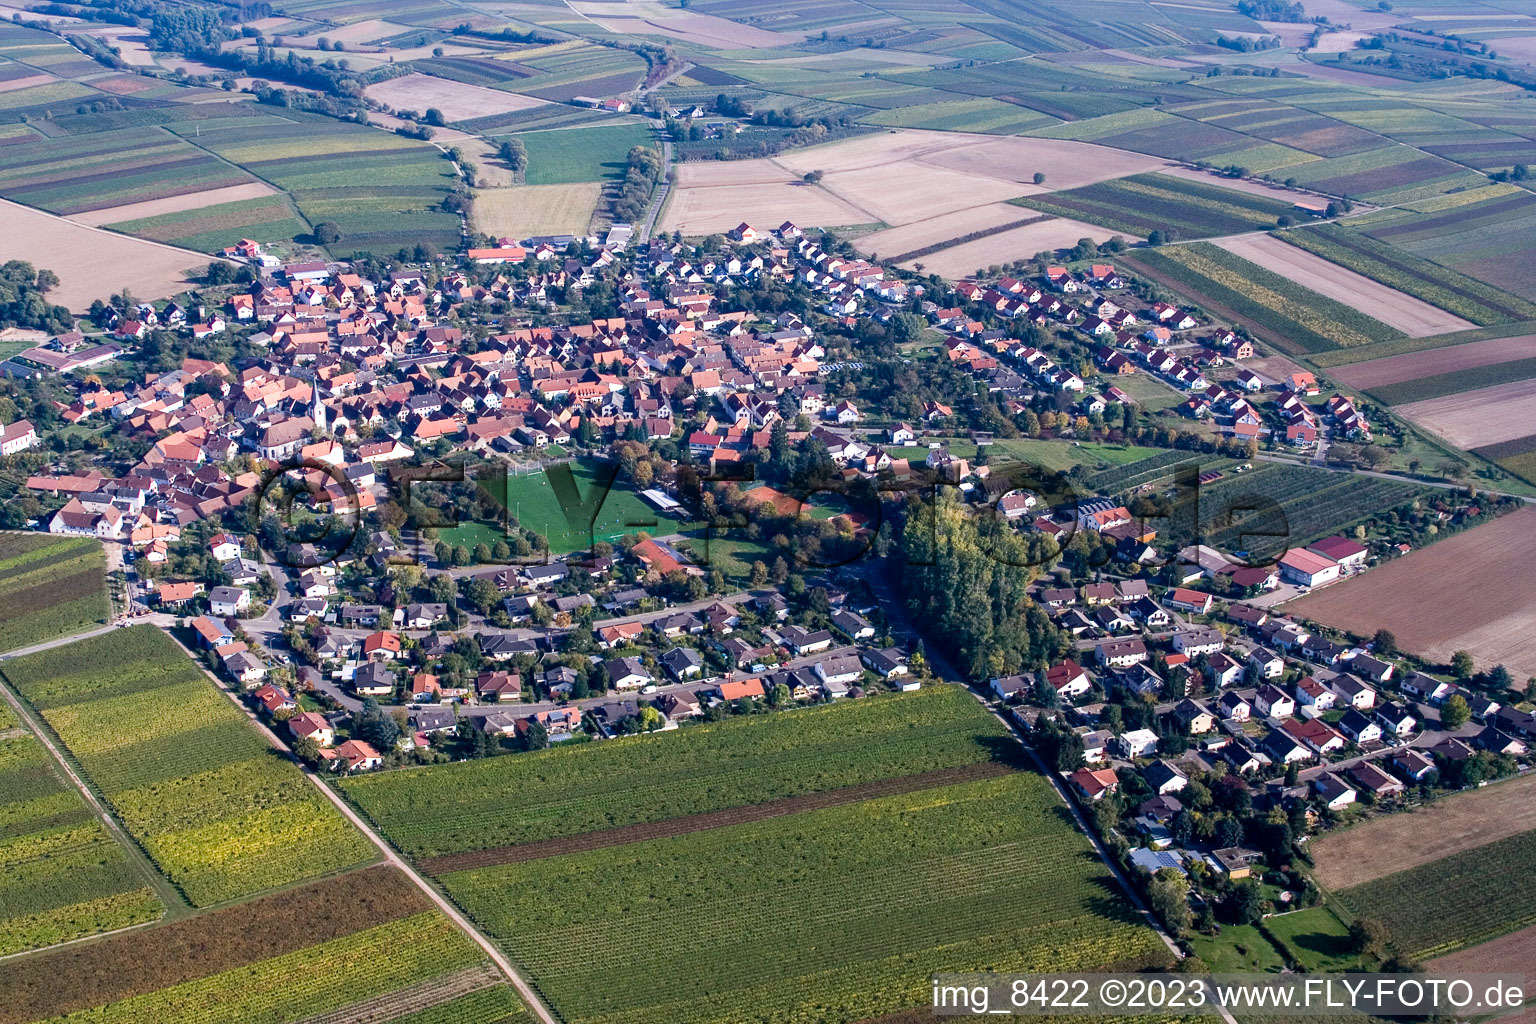 From the west in the district Mörzheim in Landau in der Pfalz in the state Rhineland-Palatinate, Germany